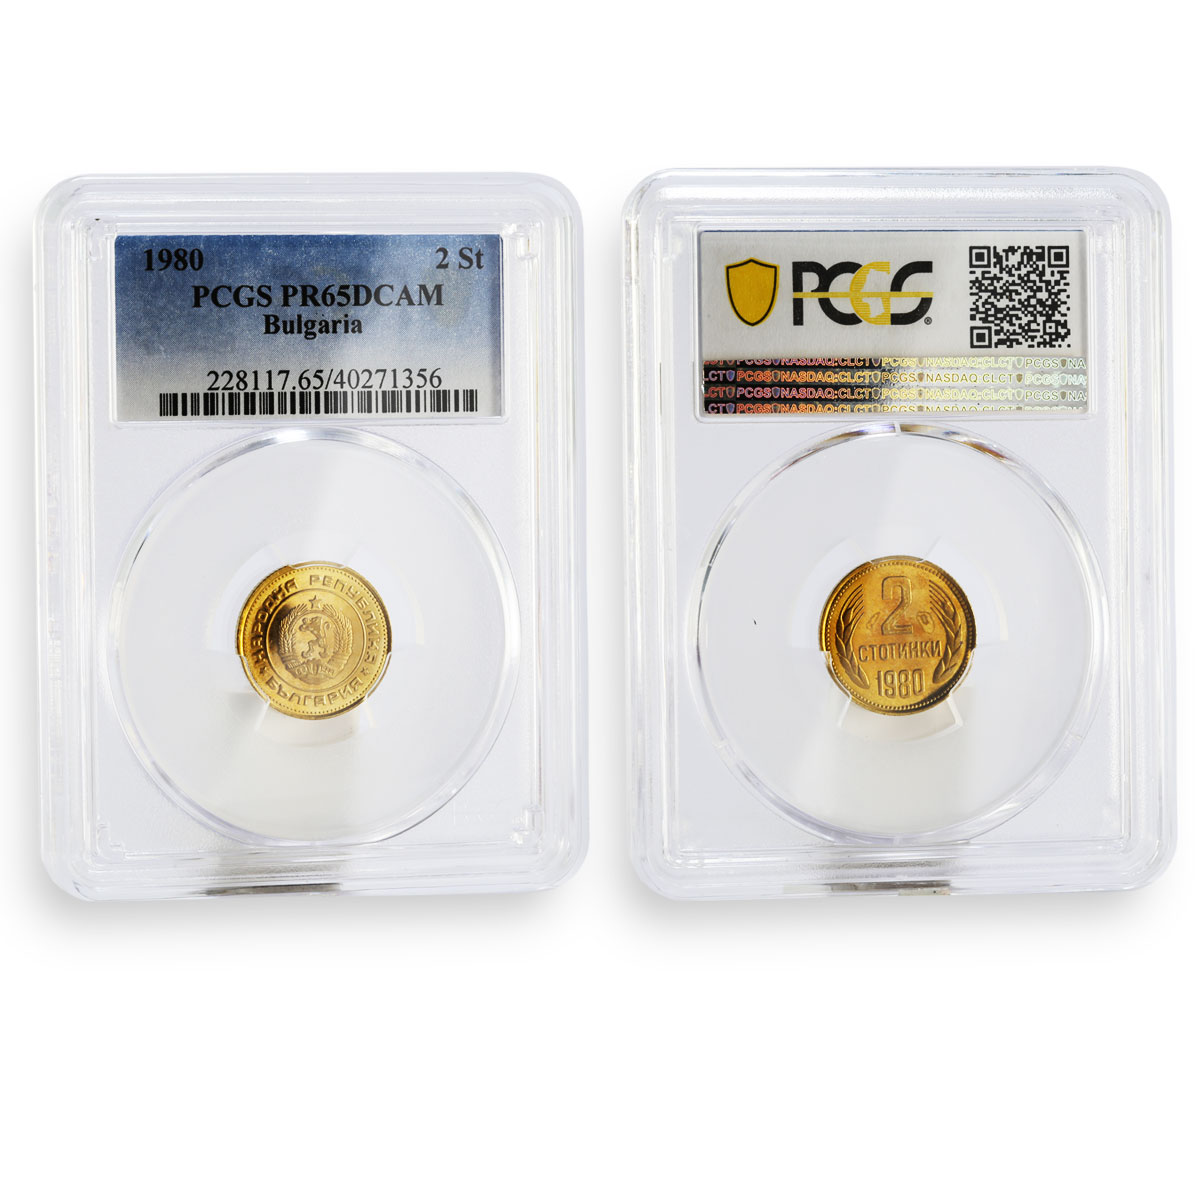 Bulgaria complete set of 7 coins PR-65 - PR-68 PCGS proof 1980